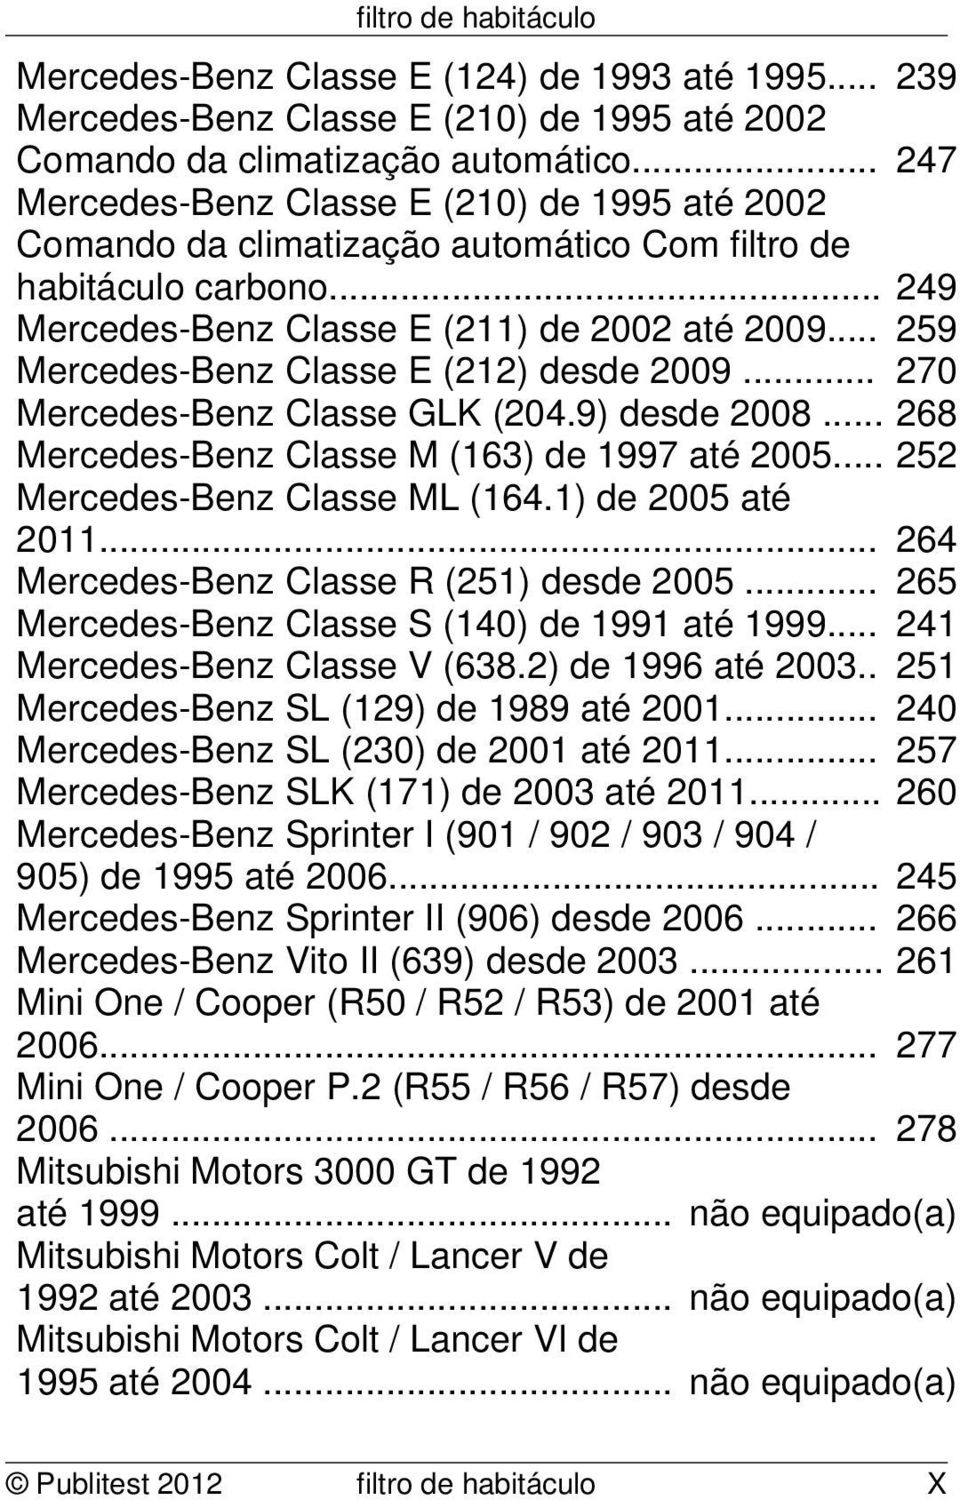 .. 259 Mercedes-Benz Classe E (212) desde 2009... 270 Mercedes-Benz Classe GLK (204.9) desde 2008... 268 Mercedes-Benz Classe M (163) de 1997 até 2005... 252 Mercedes-Benz Classe ML (164.